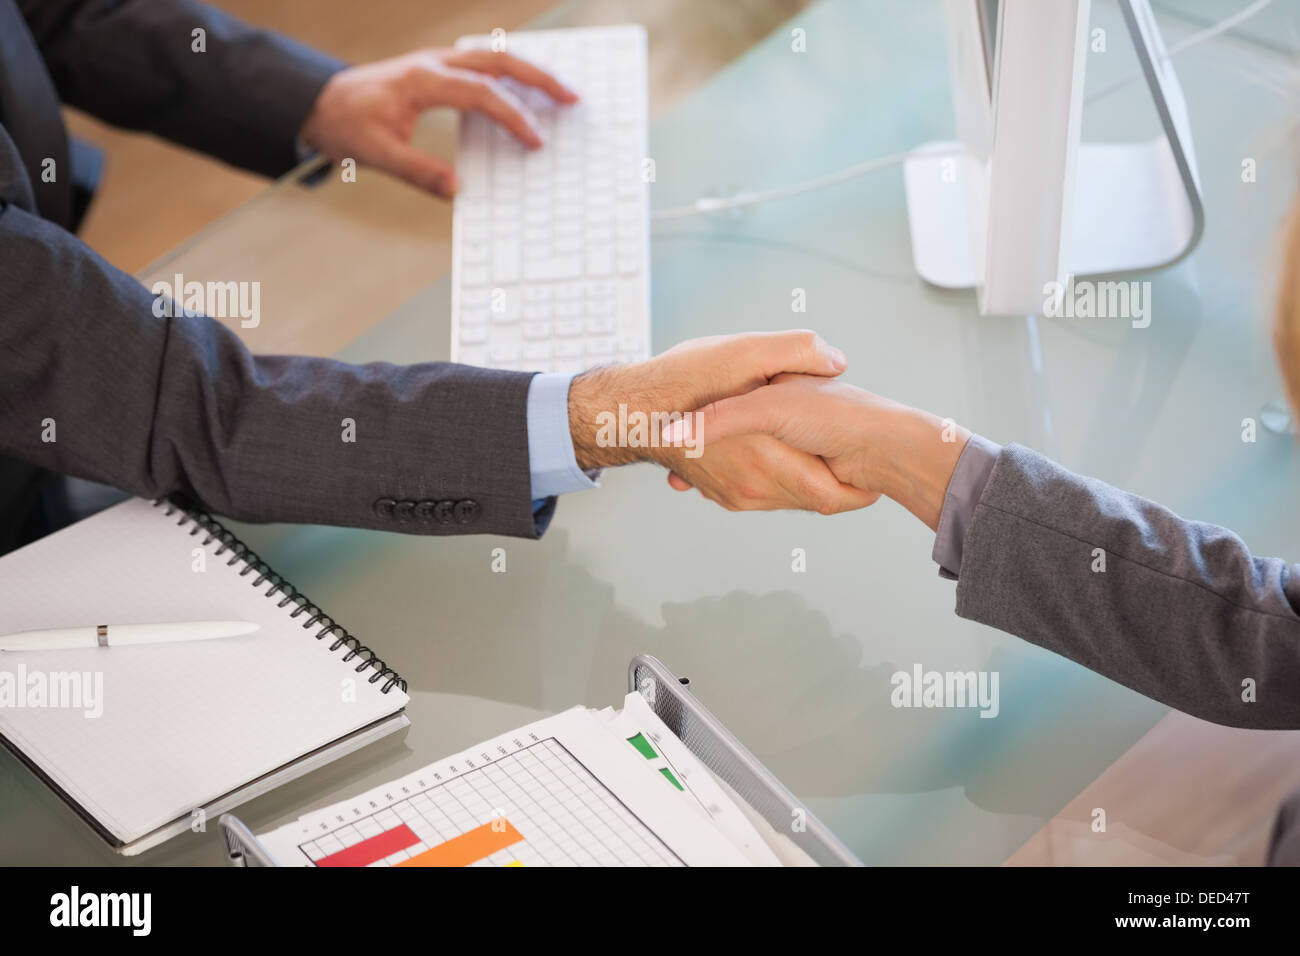 A handshake between business people Stock Photo